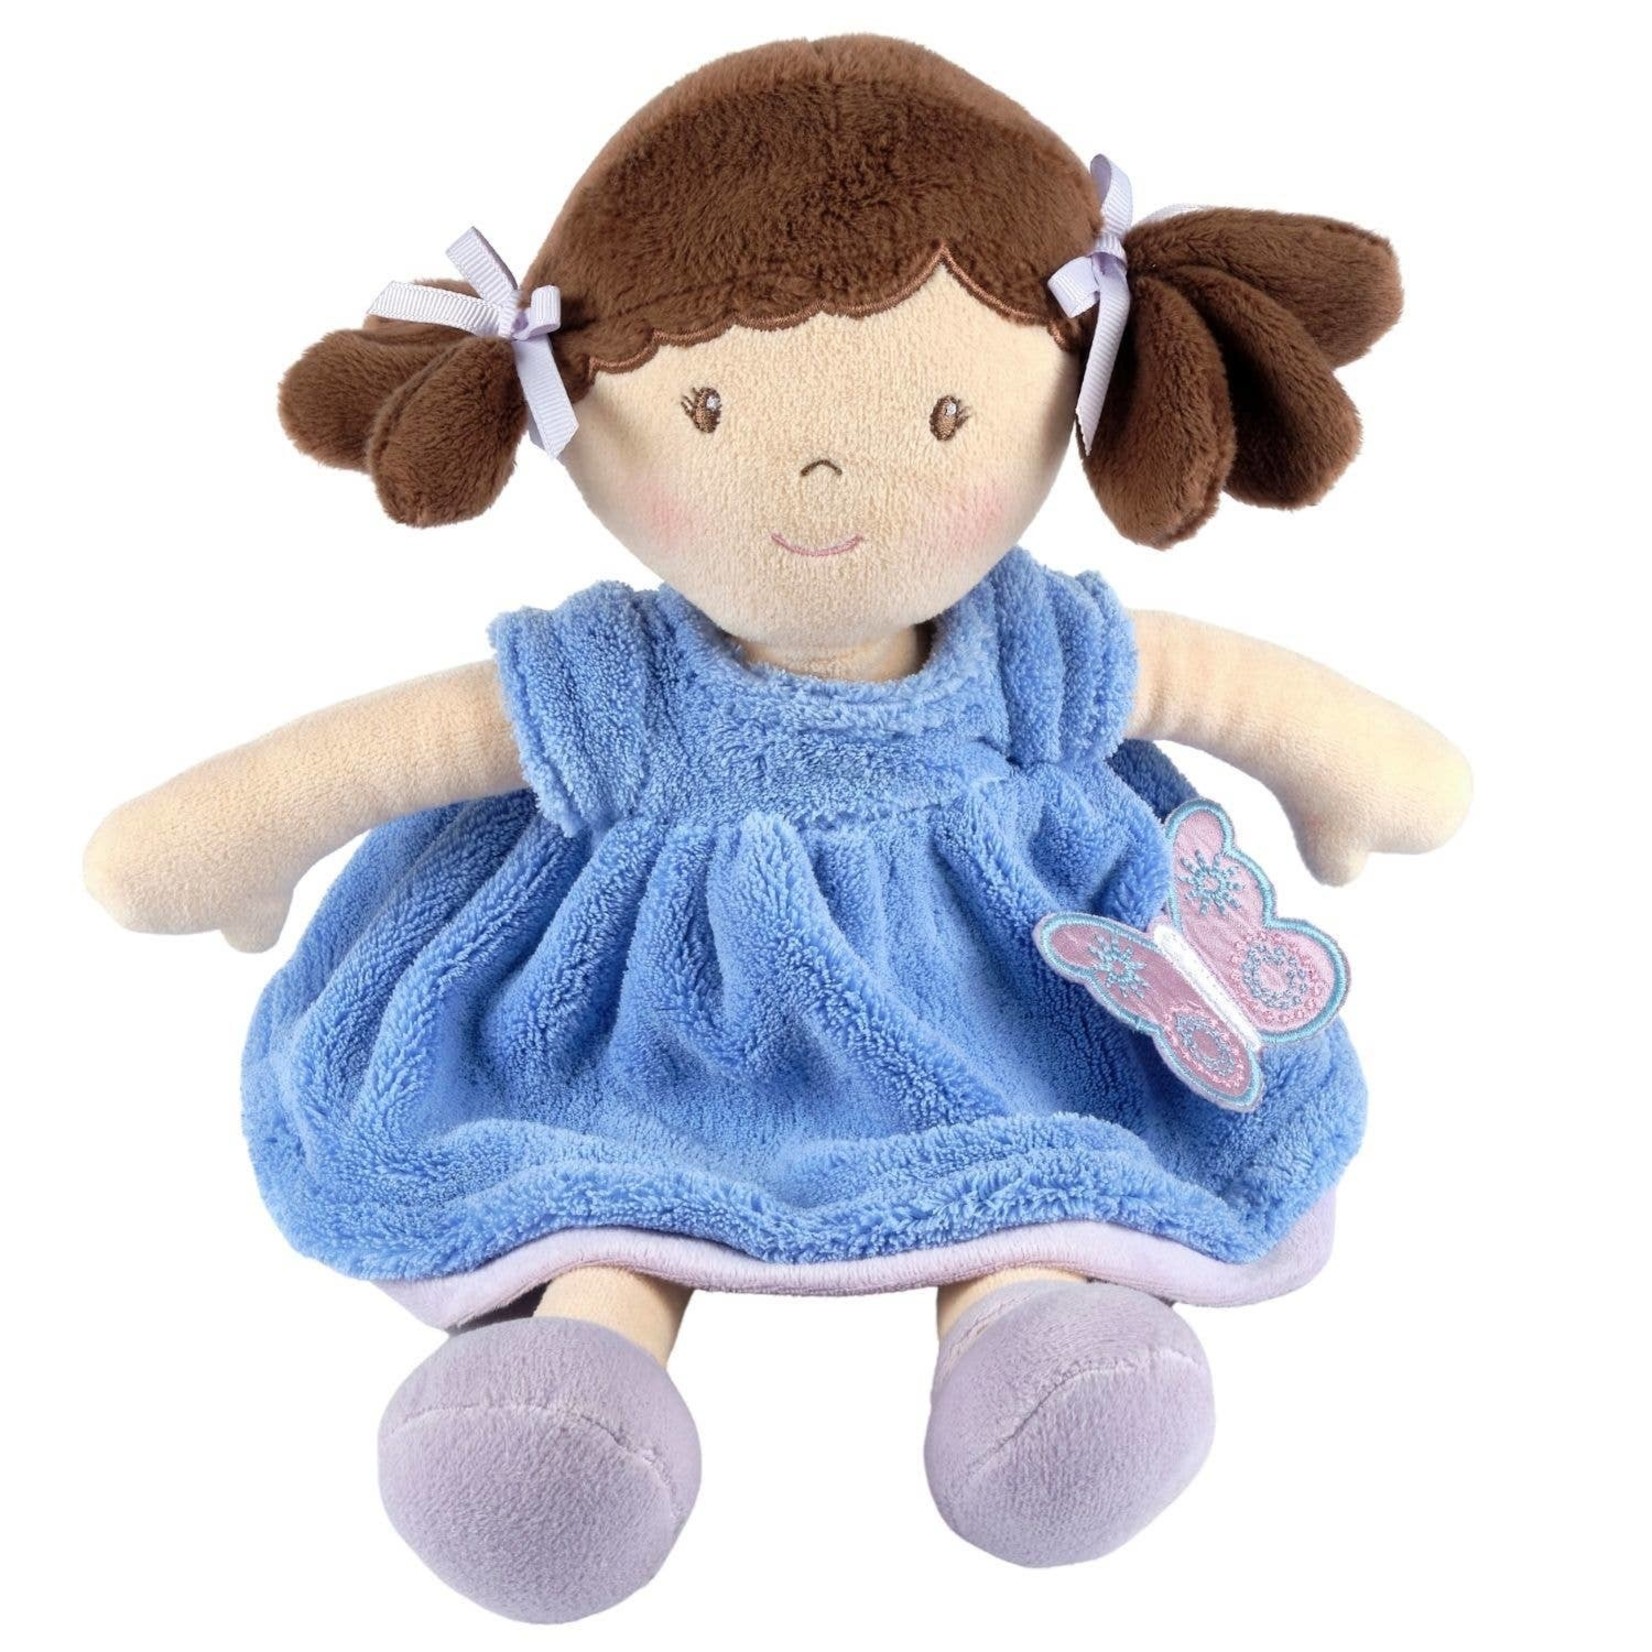 Tikiri Toys Pari Doll Brown Hair Blue Dress new